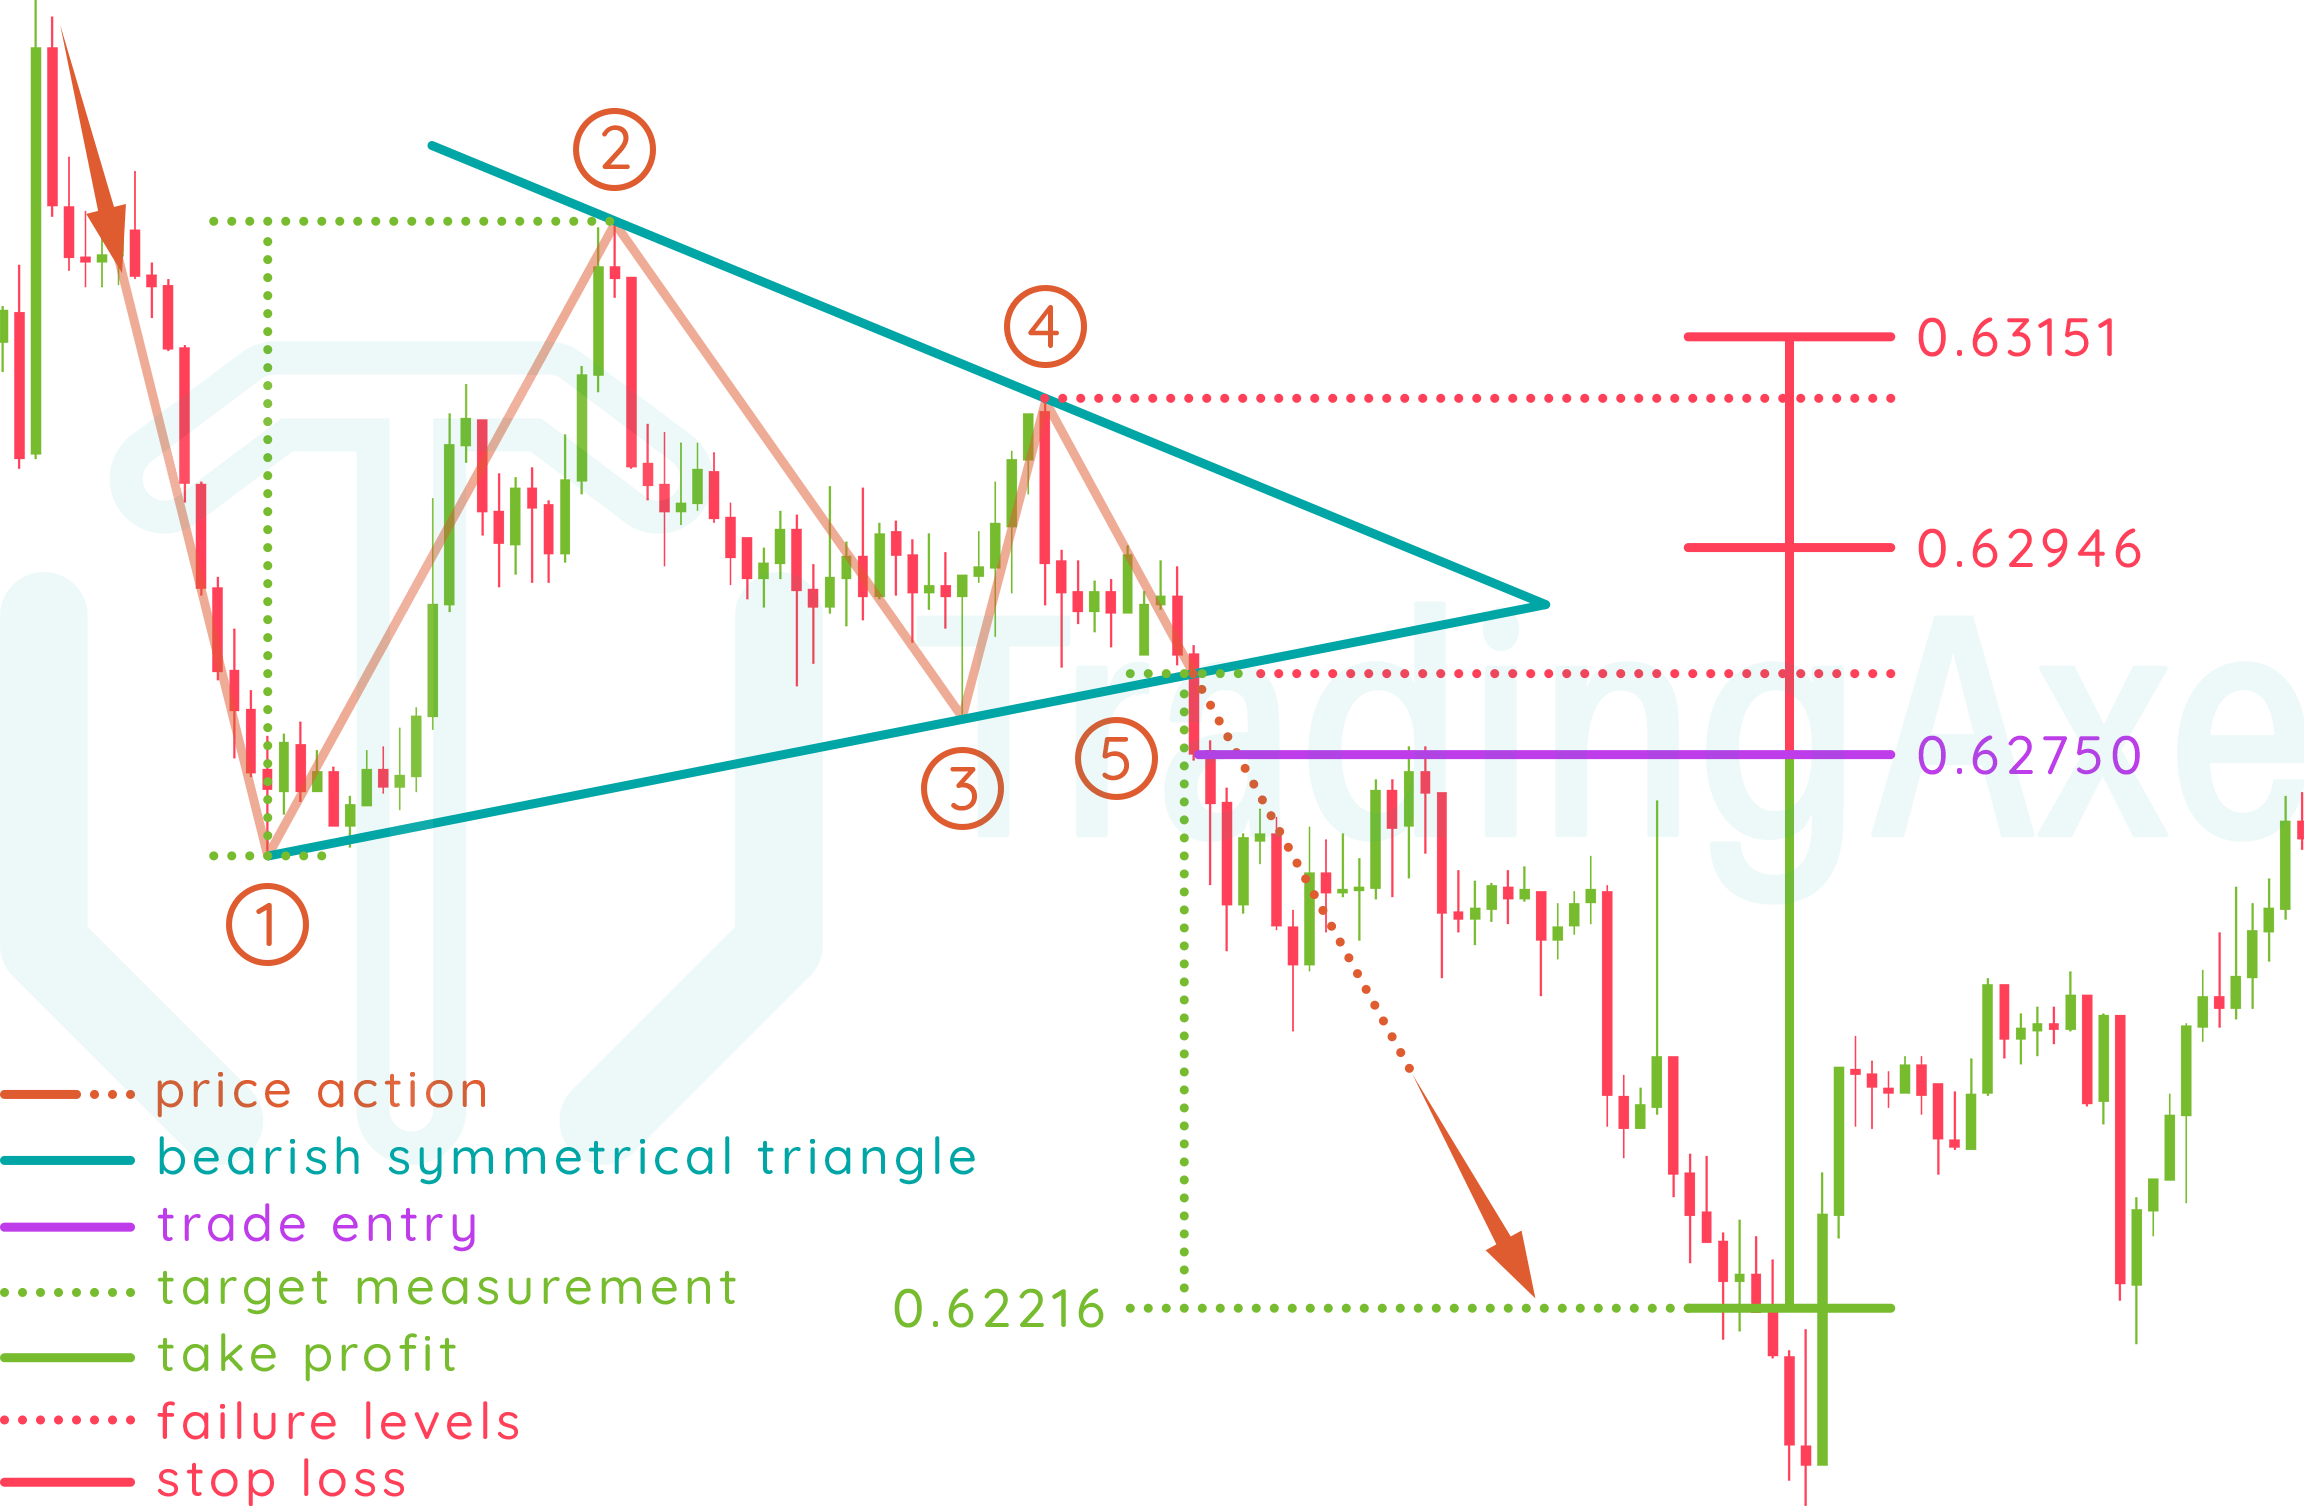 Bearish symmetrical triangle real trading example